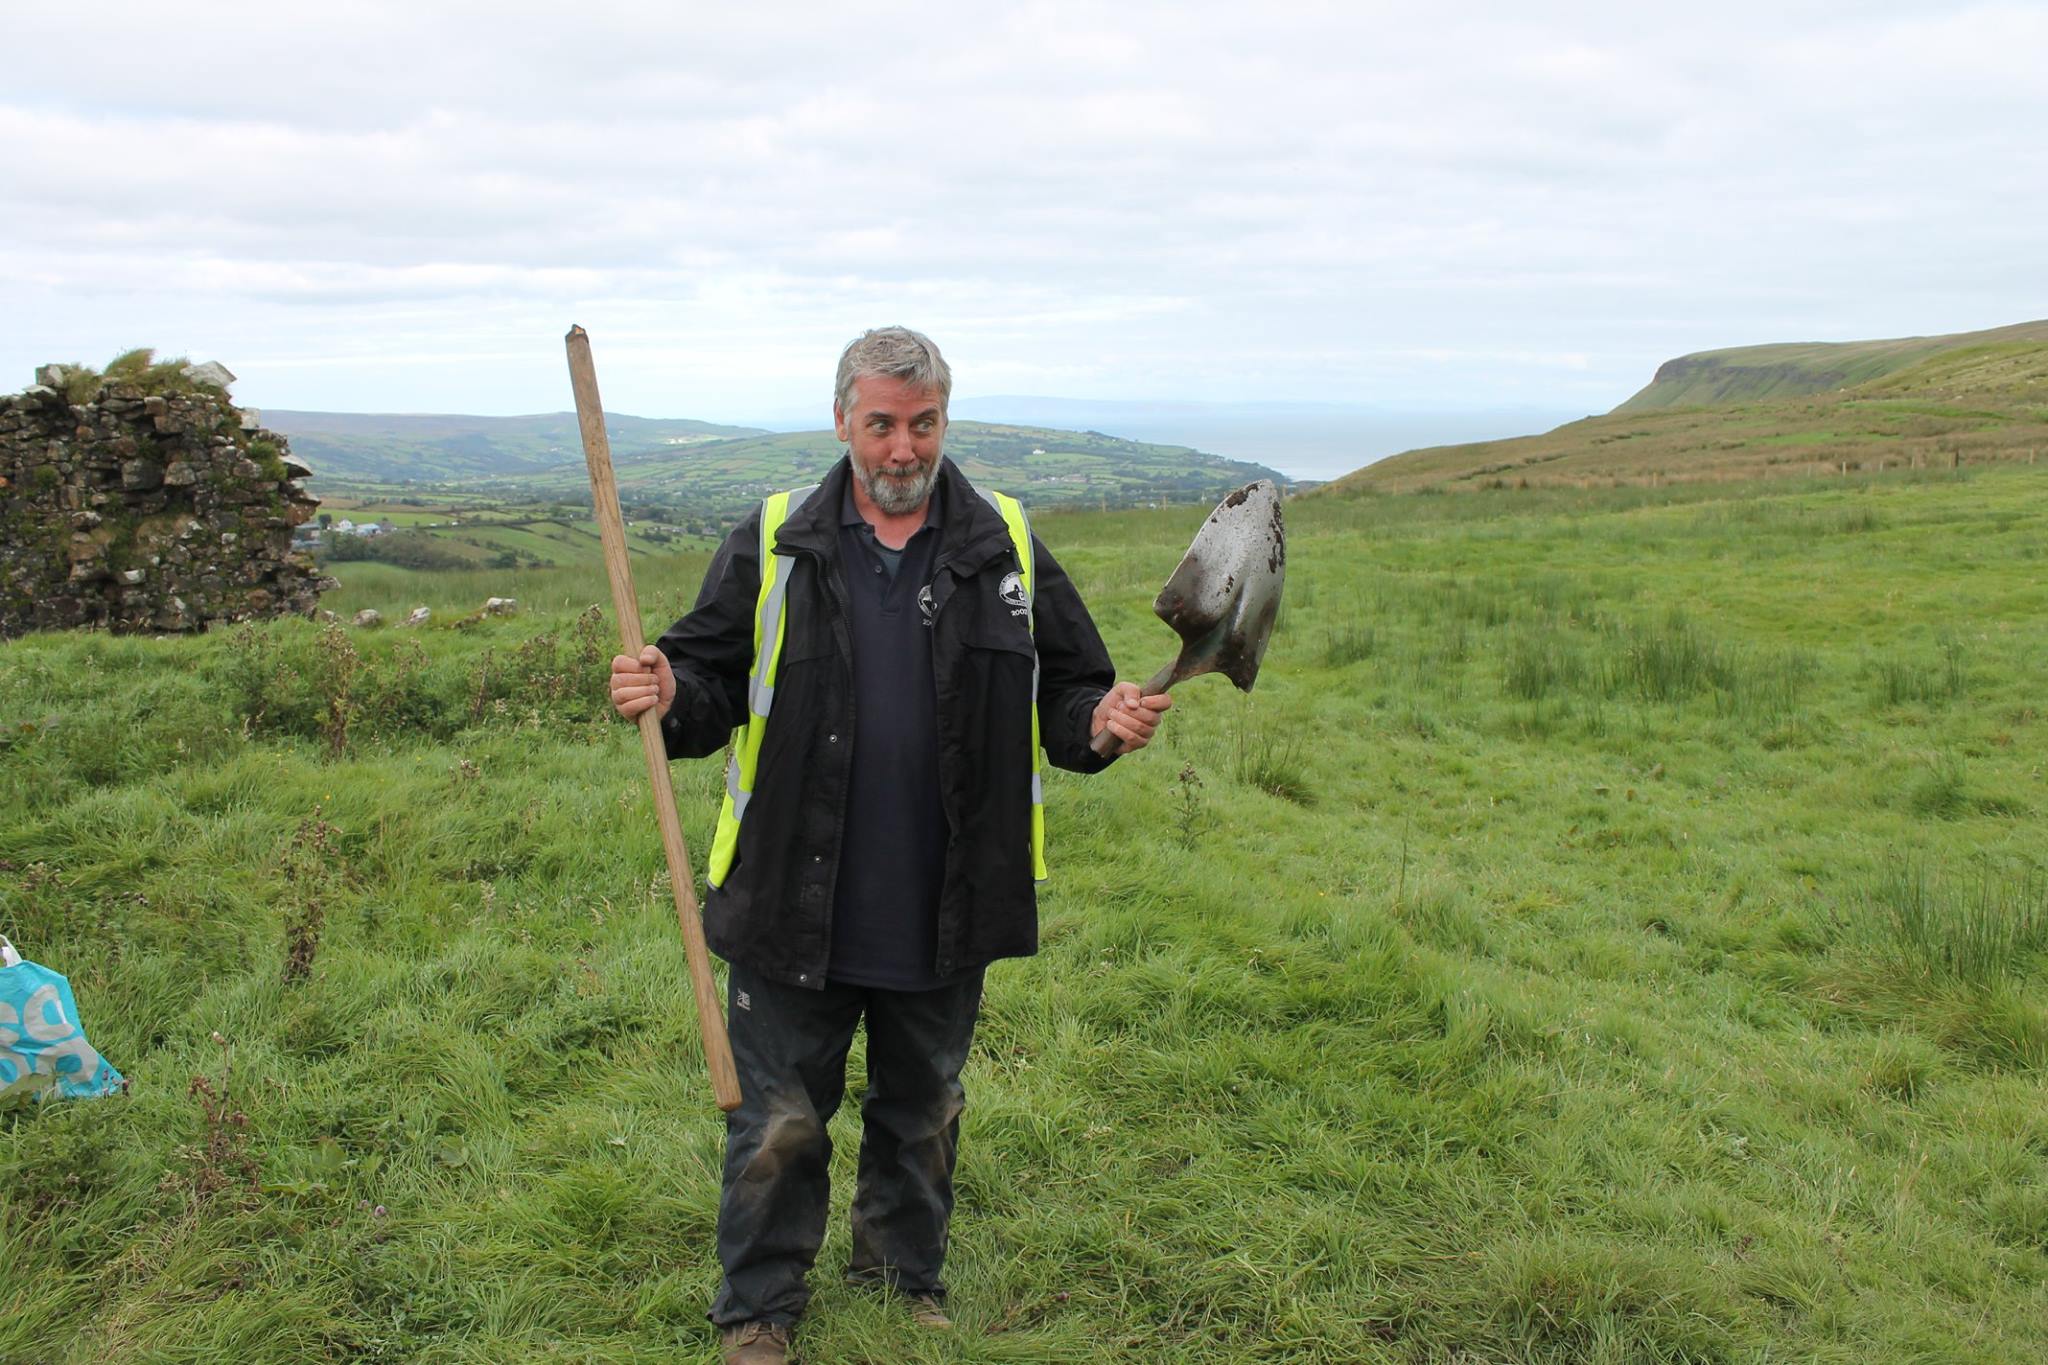 Ruairí Ó Baoill standing in a field holding a broken shovel